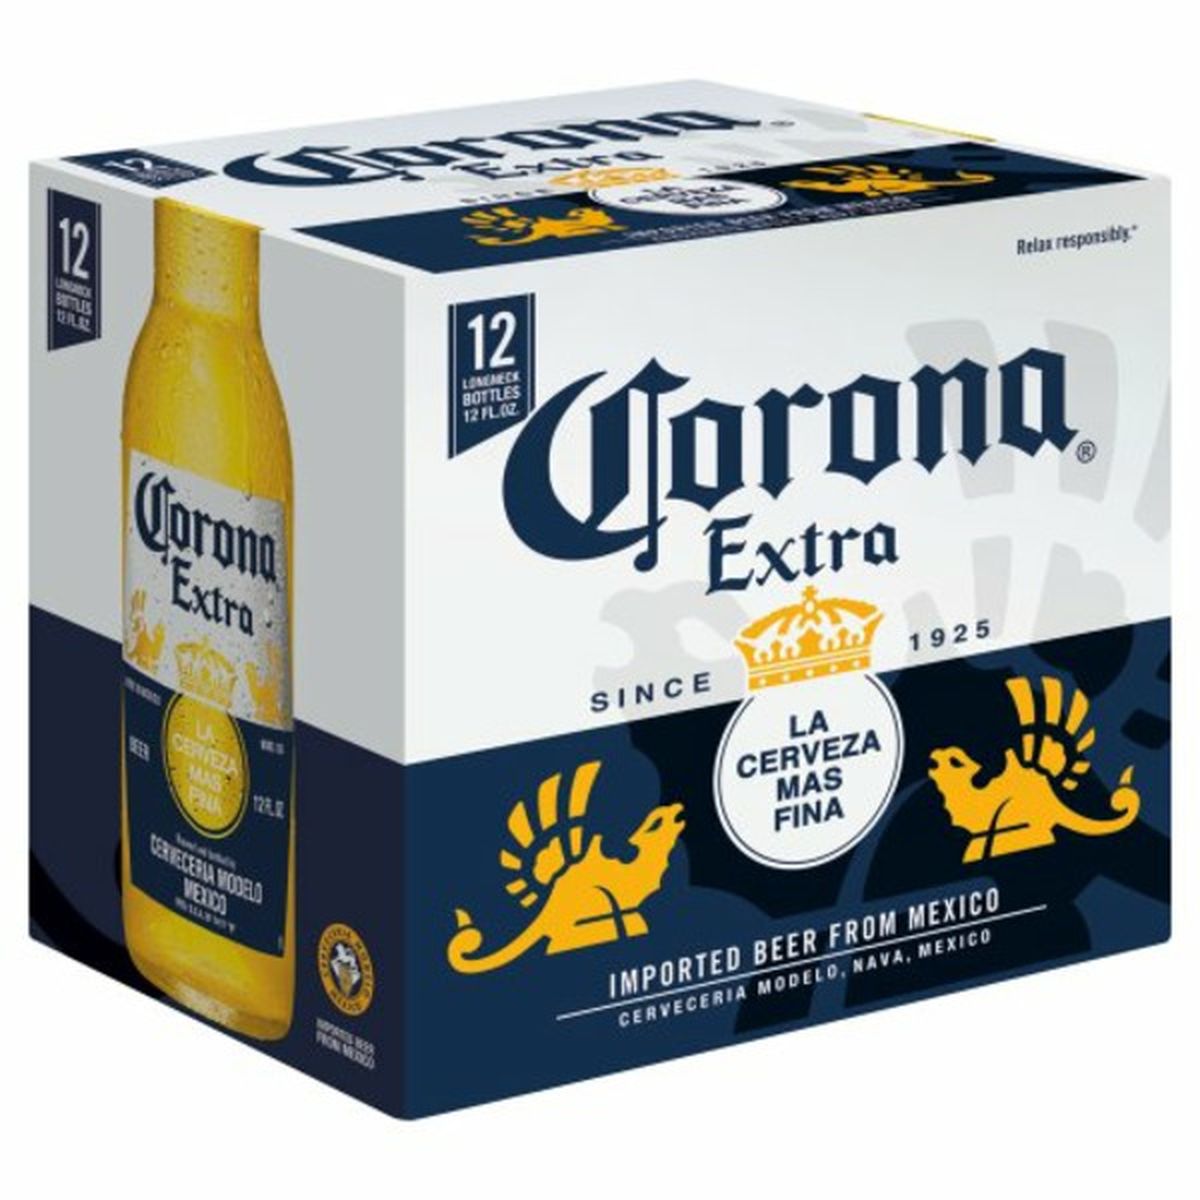 Calories in Corona Extra Extra Beer 12/12oz bottles